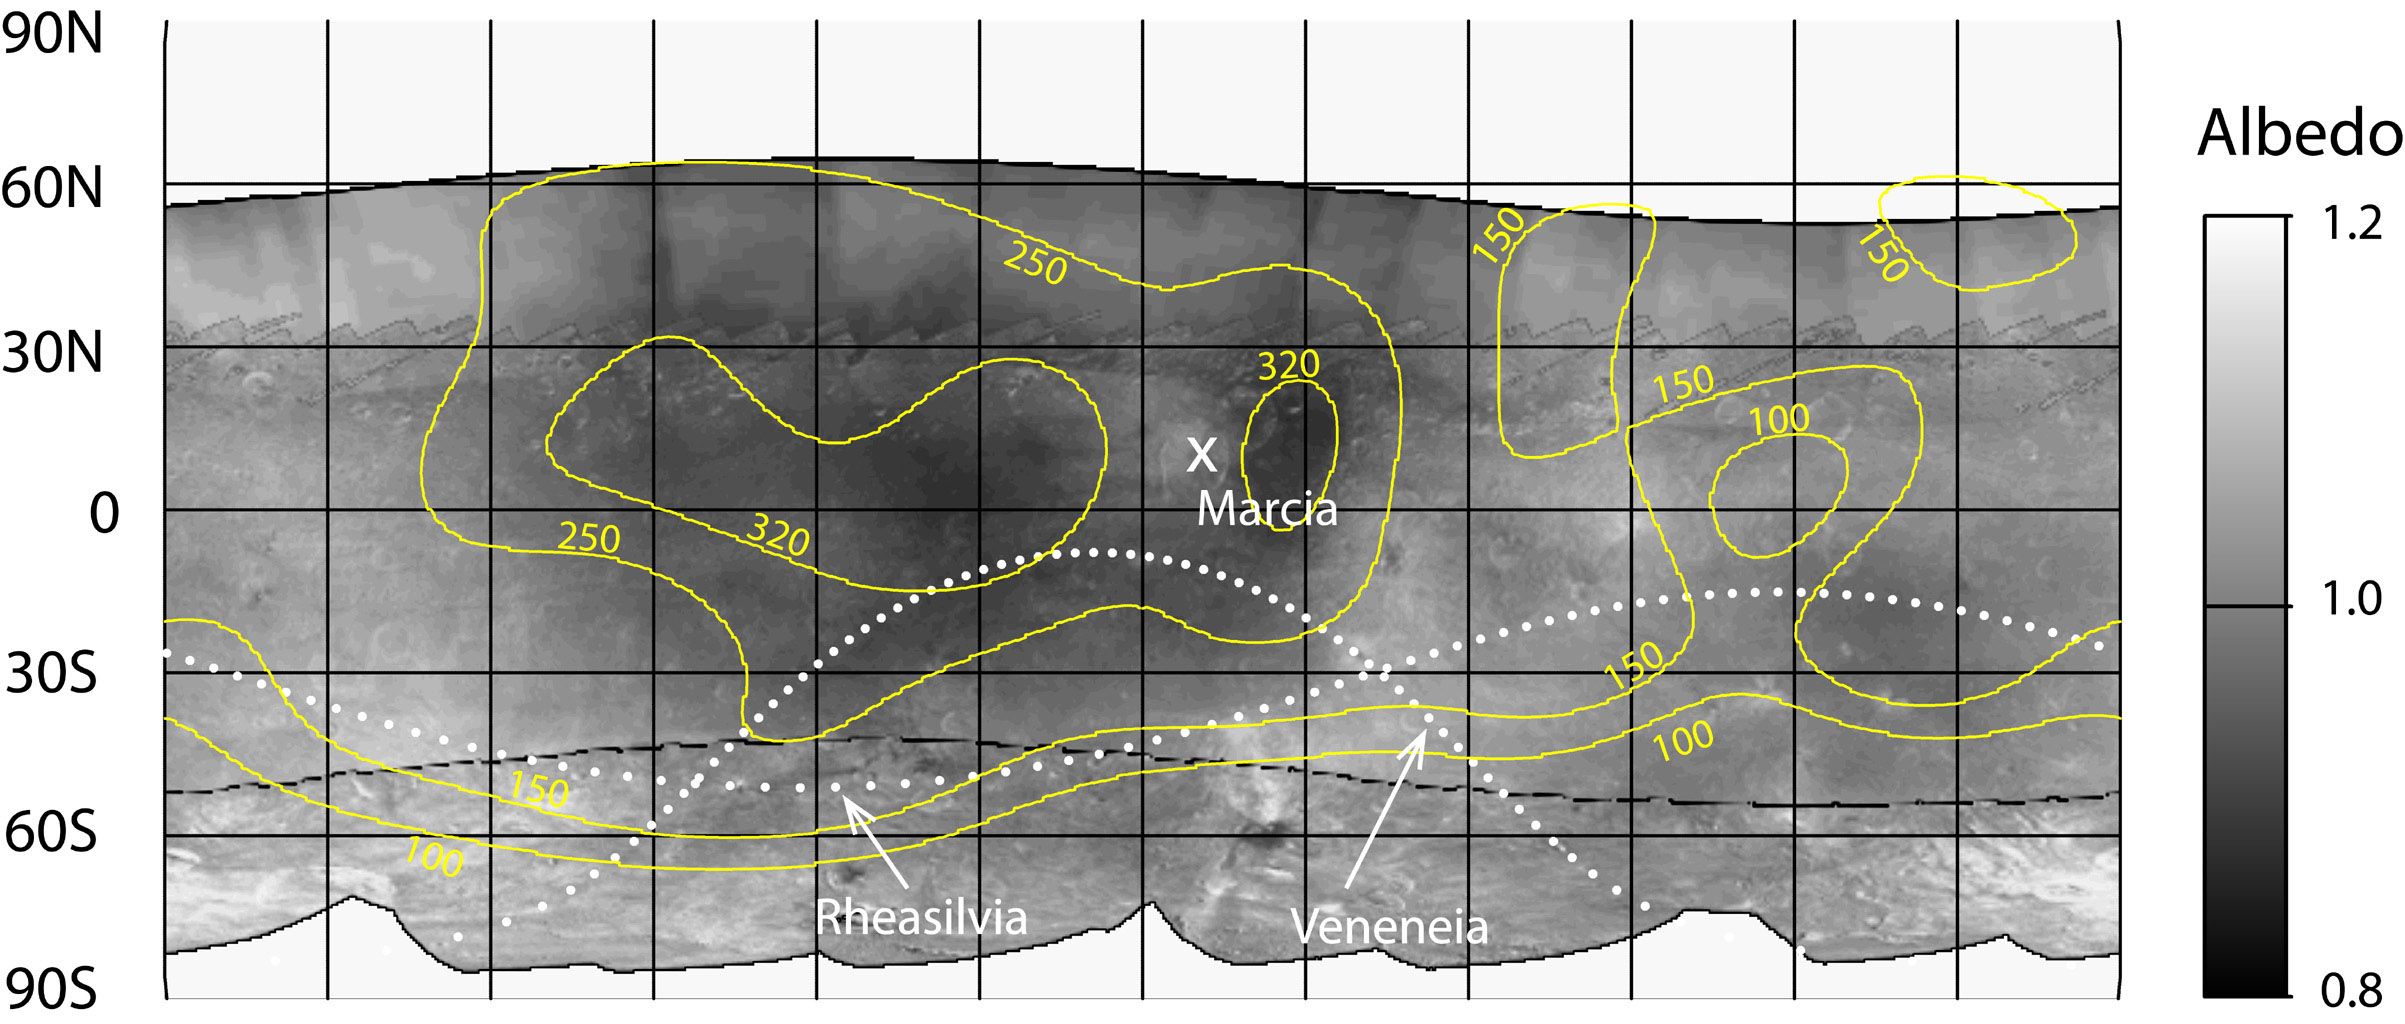 Contour Map of Hydrogen on Vesta